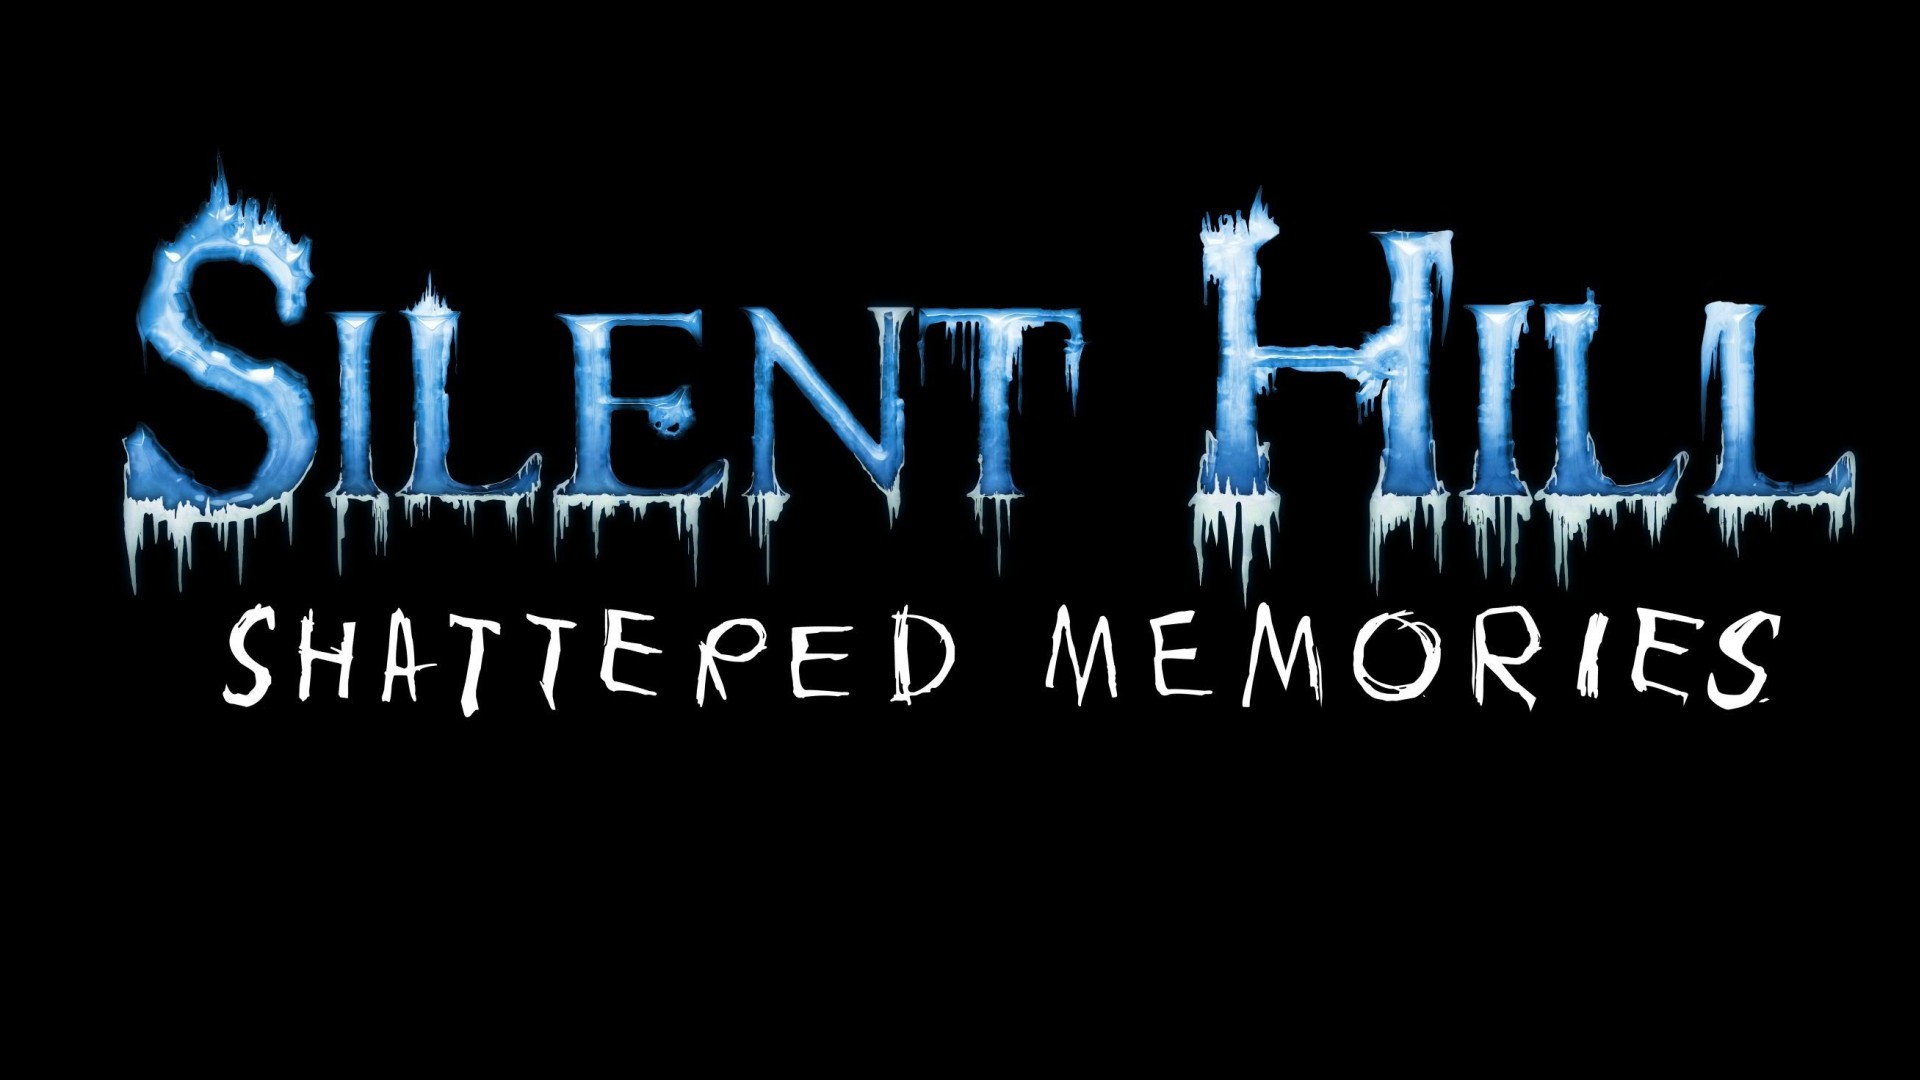 376446 baixar imagens videogame, silent hill: shattered memories, silent hill - papéis de parede e protetores de tela gratuitamente